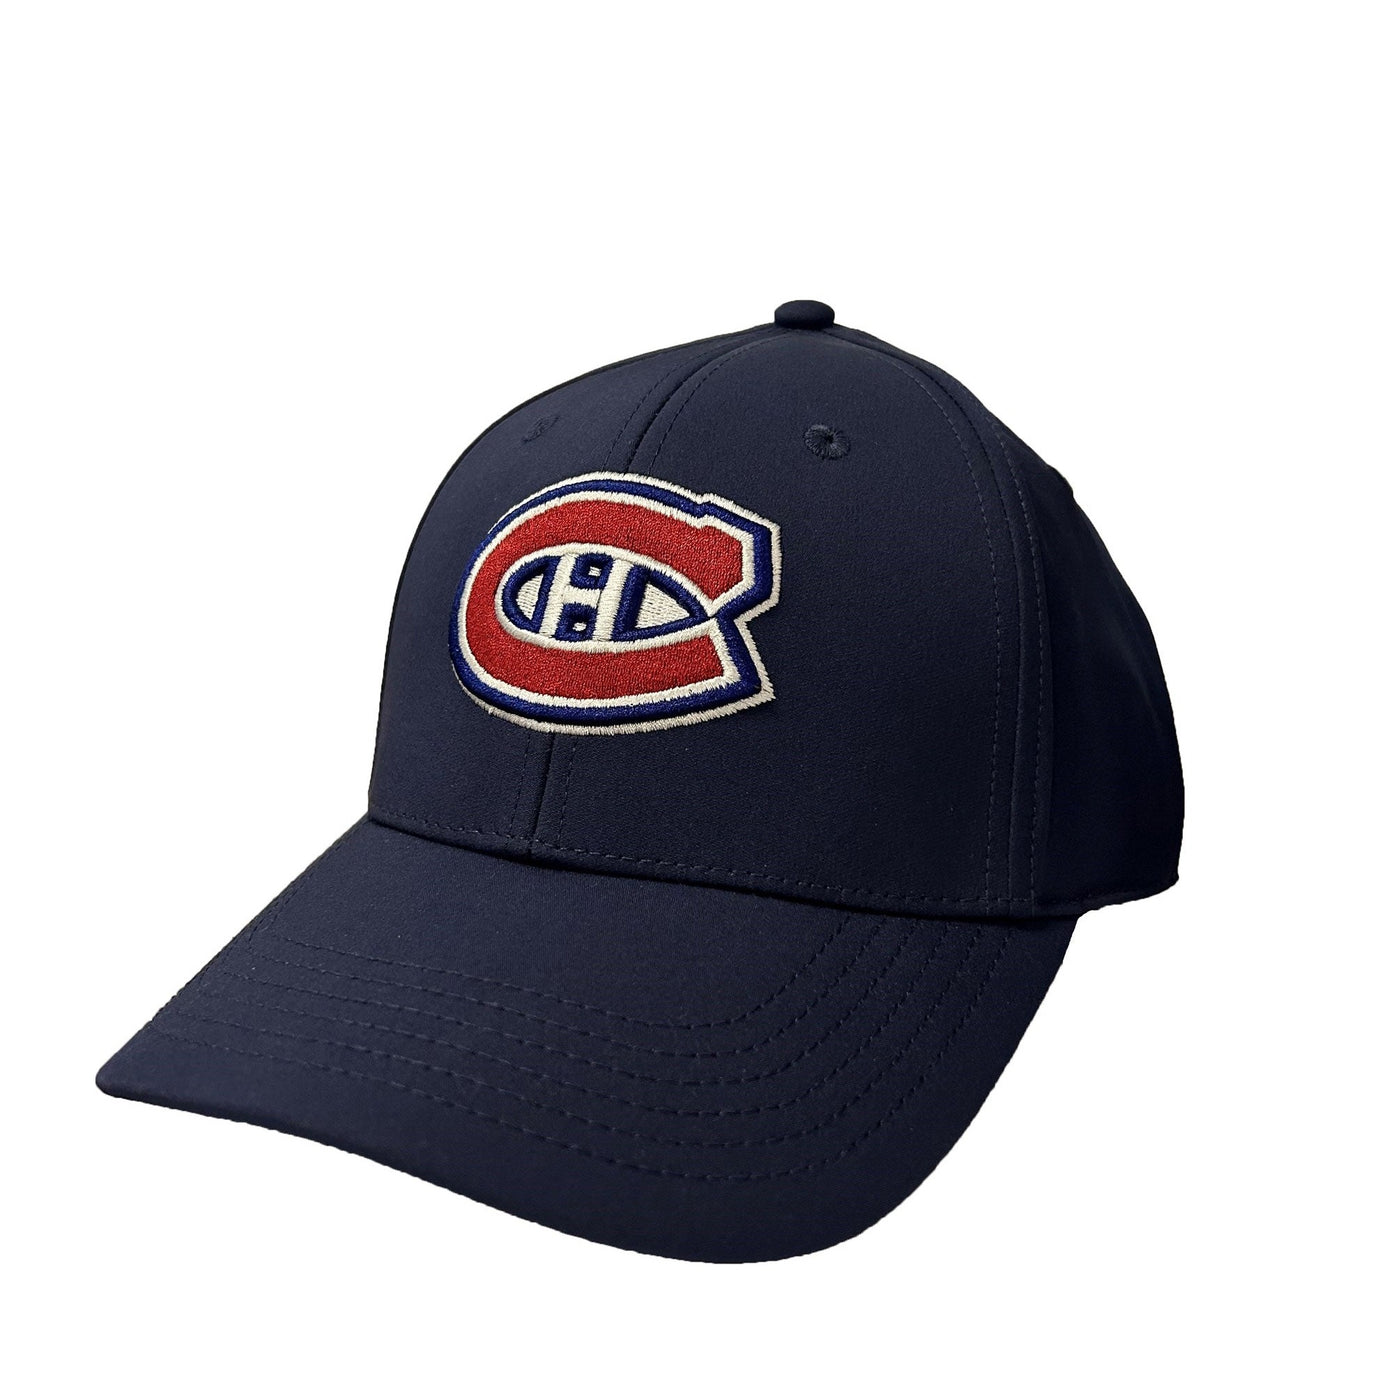 American Needle NHL Team Player Stretch Hat - Montreal Canadiens - TheHockeyShop.com